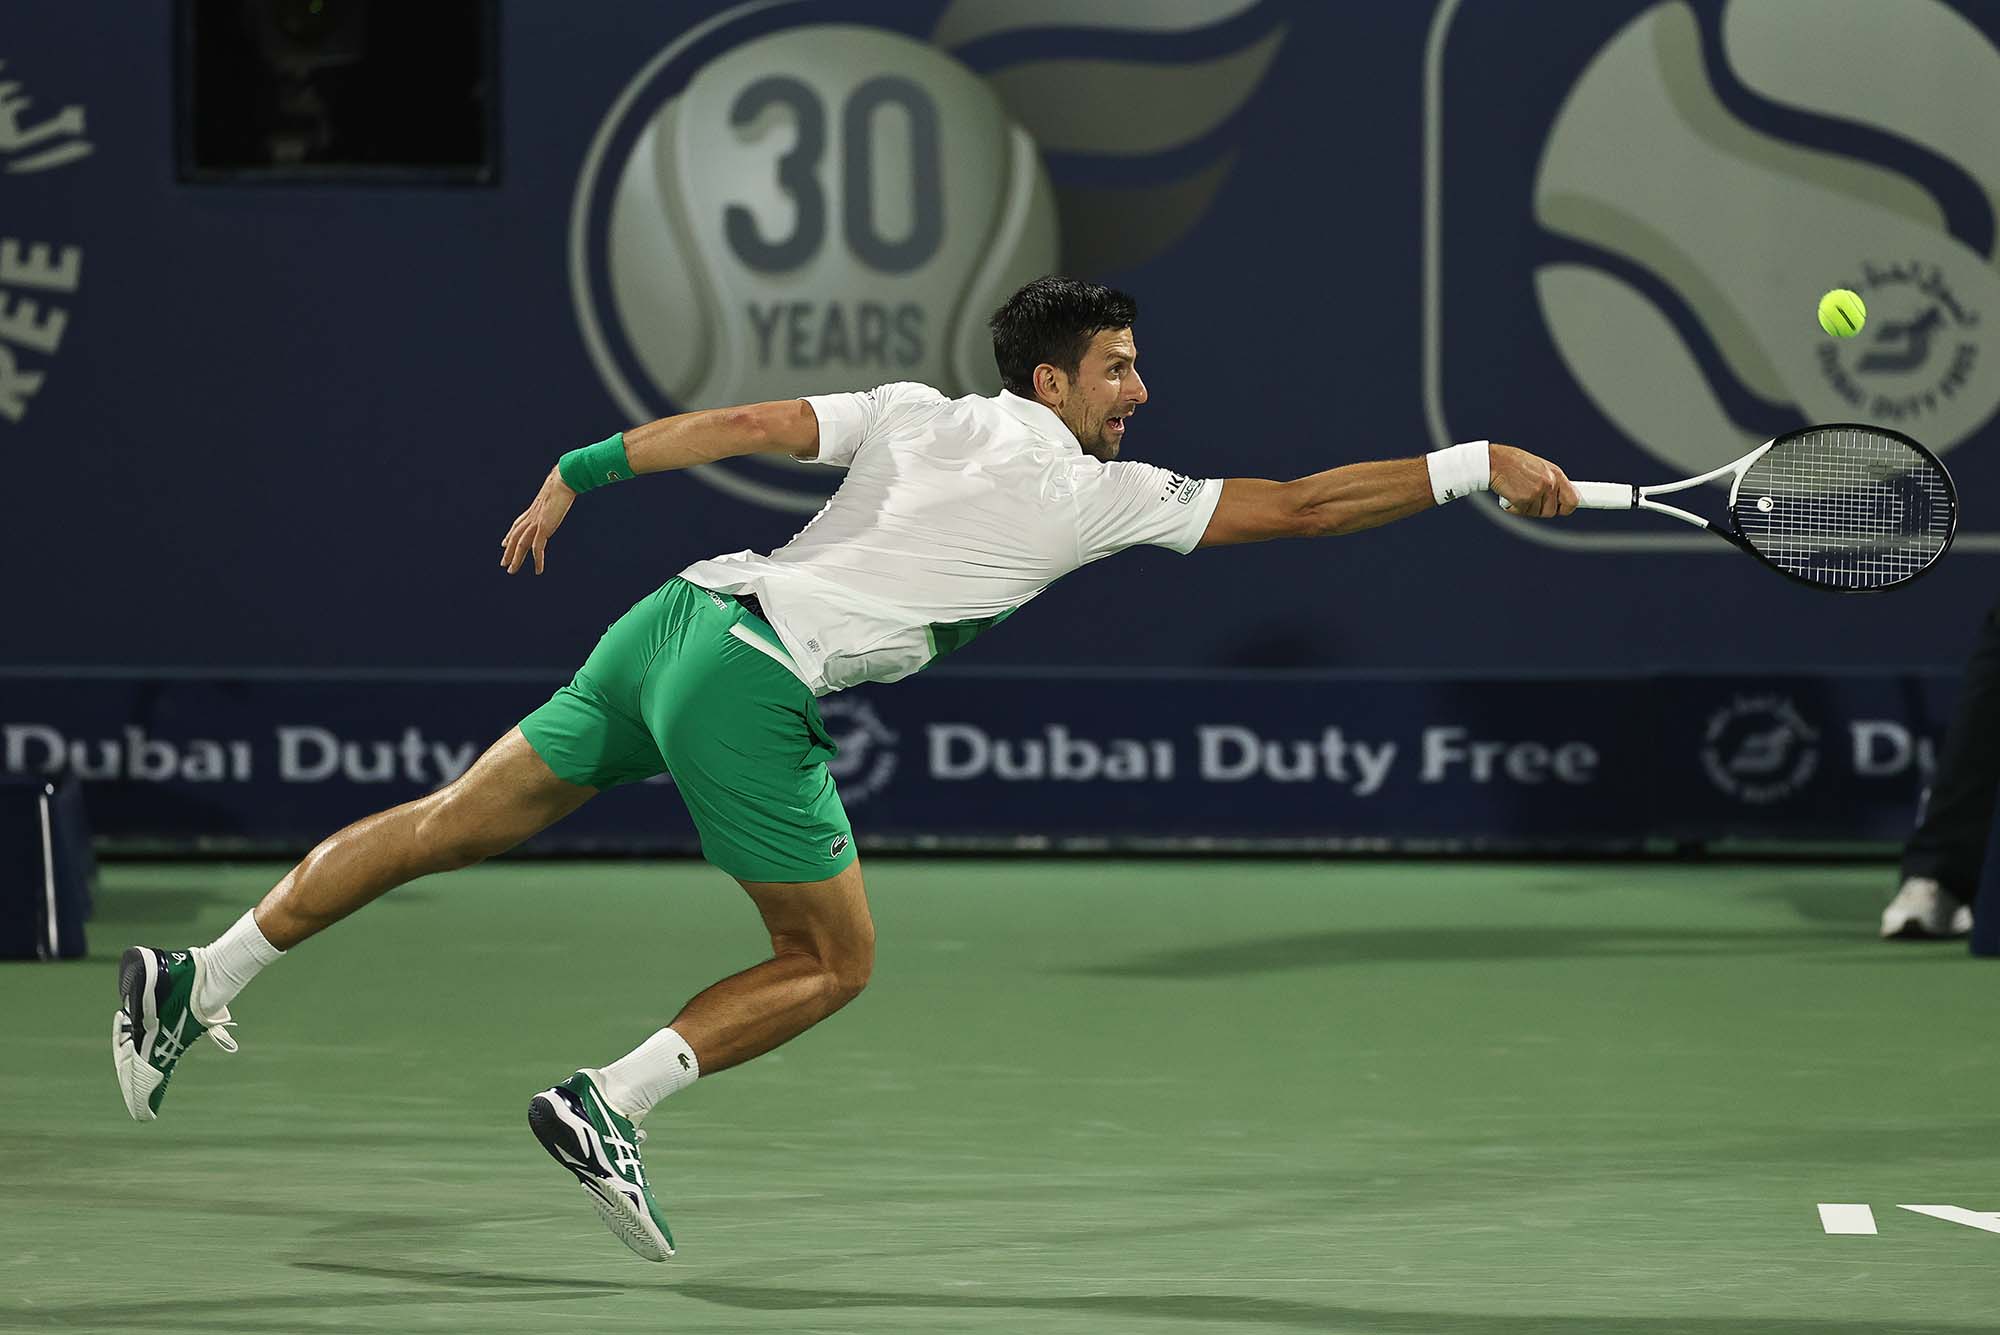 Tennis: Jannik Sinner saves match points to advance in Dubai